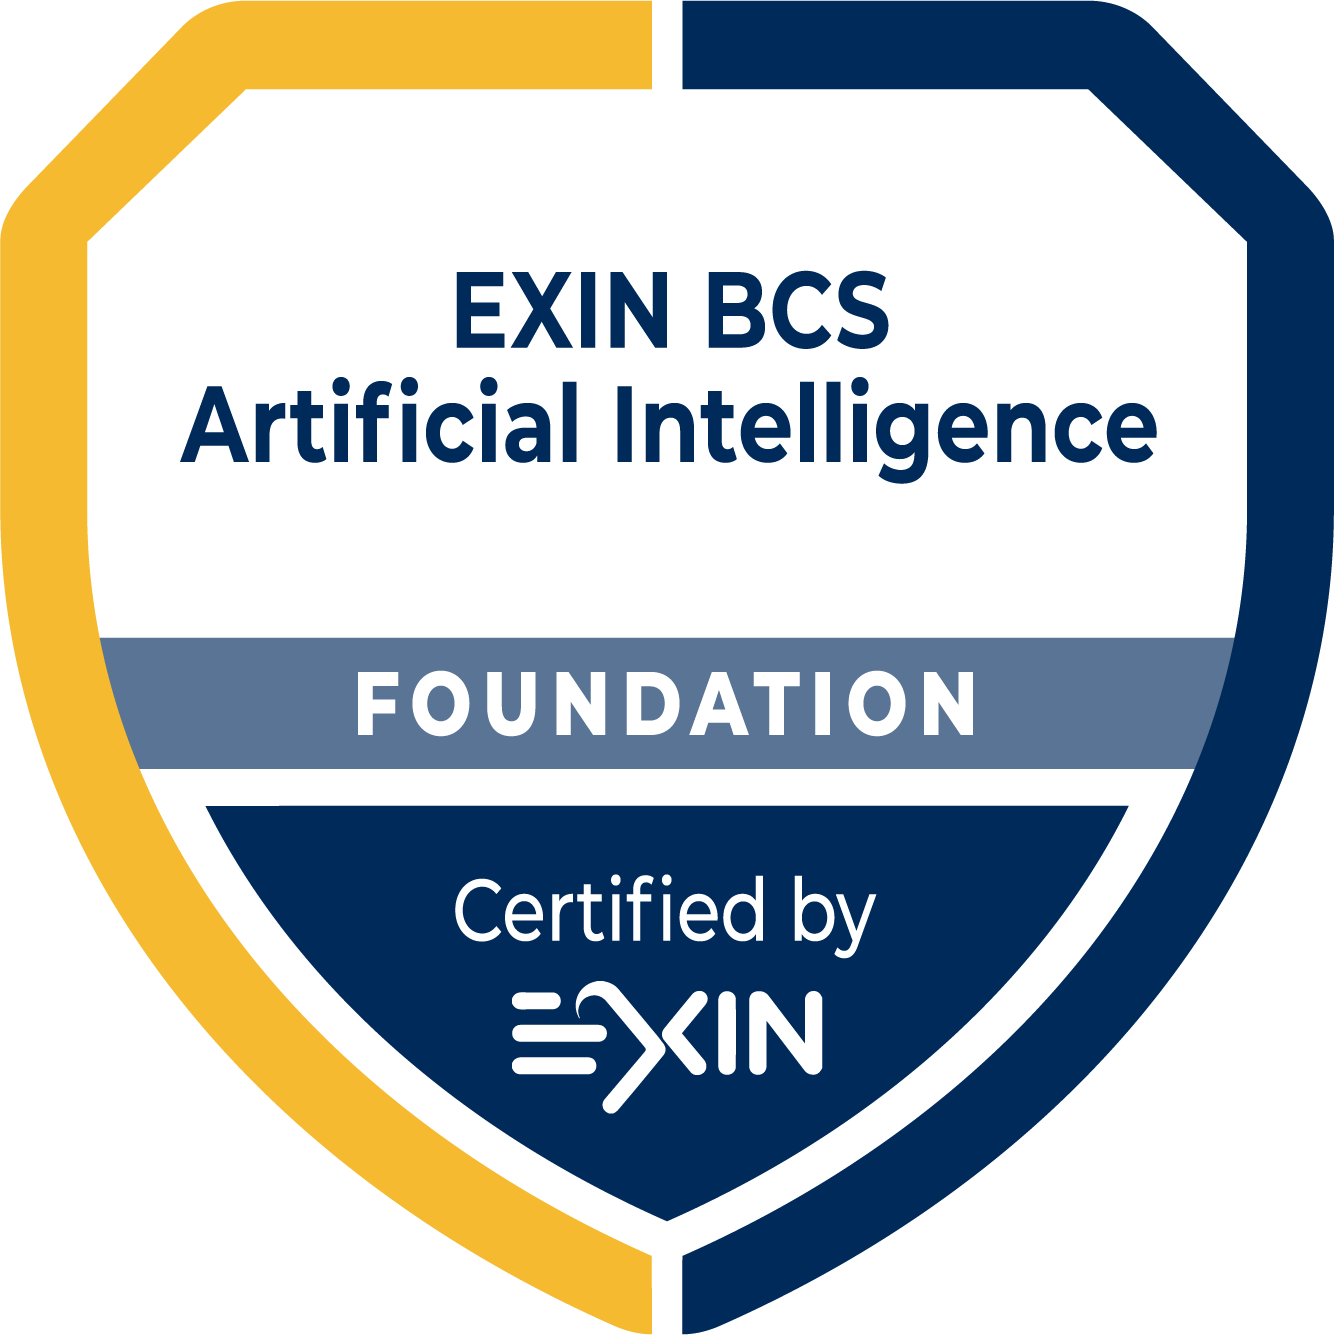 EXIN BCS Artificial Intelligence Foundation